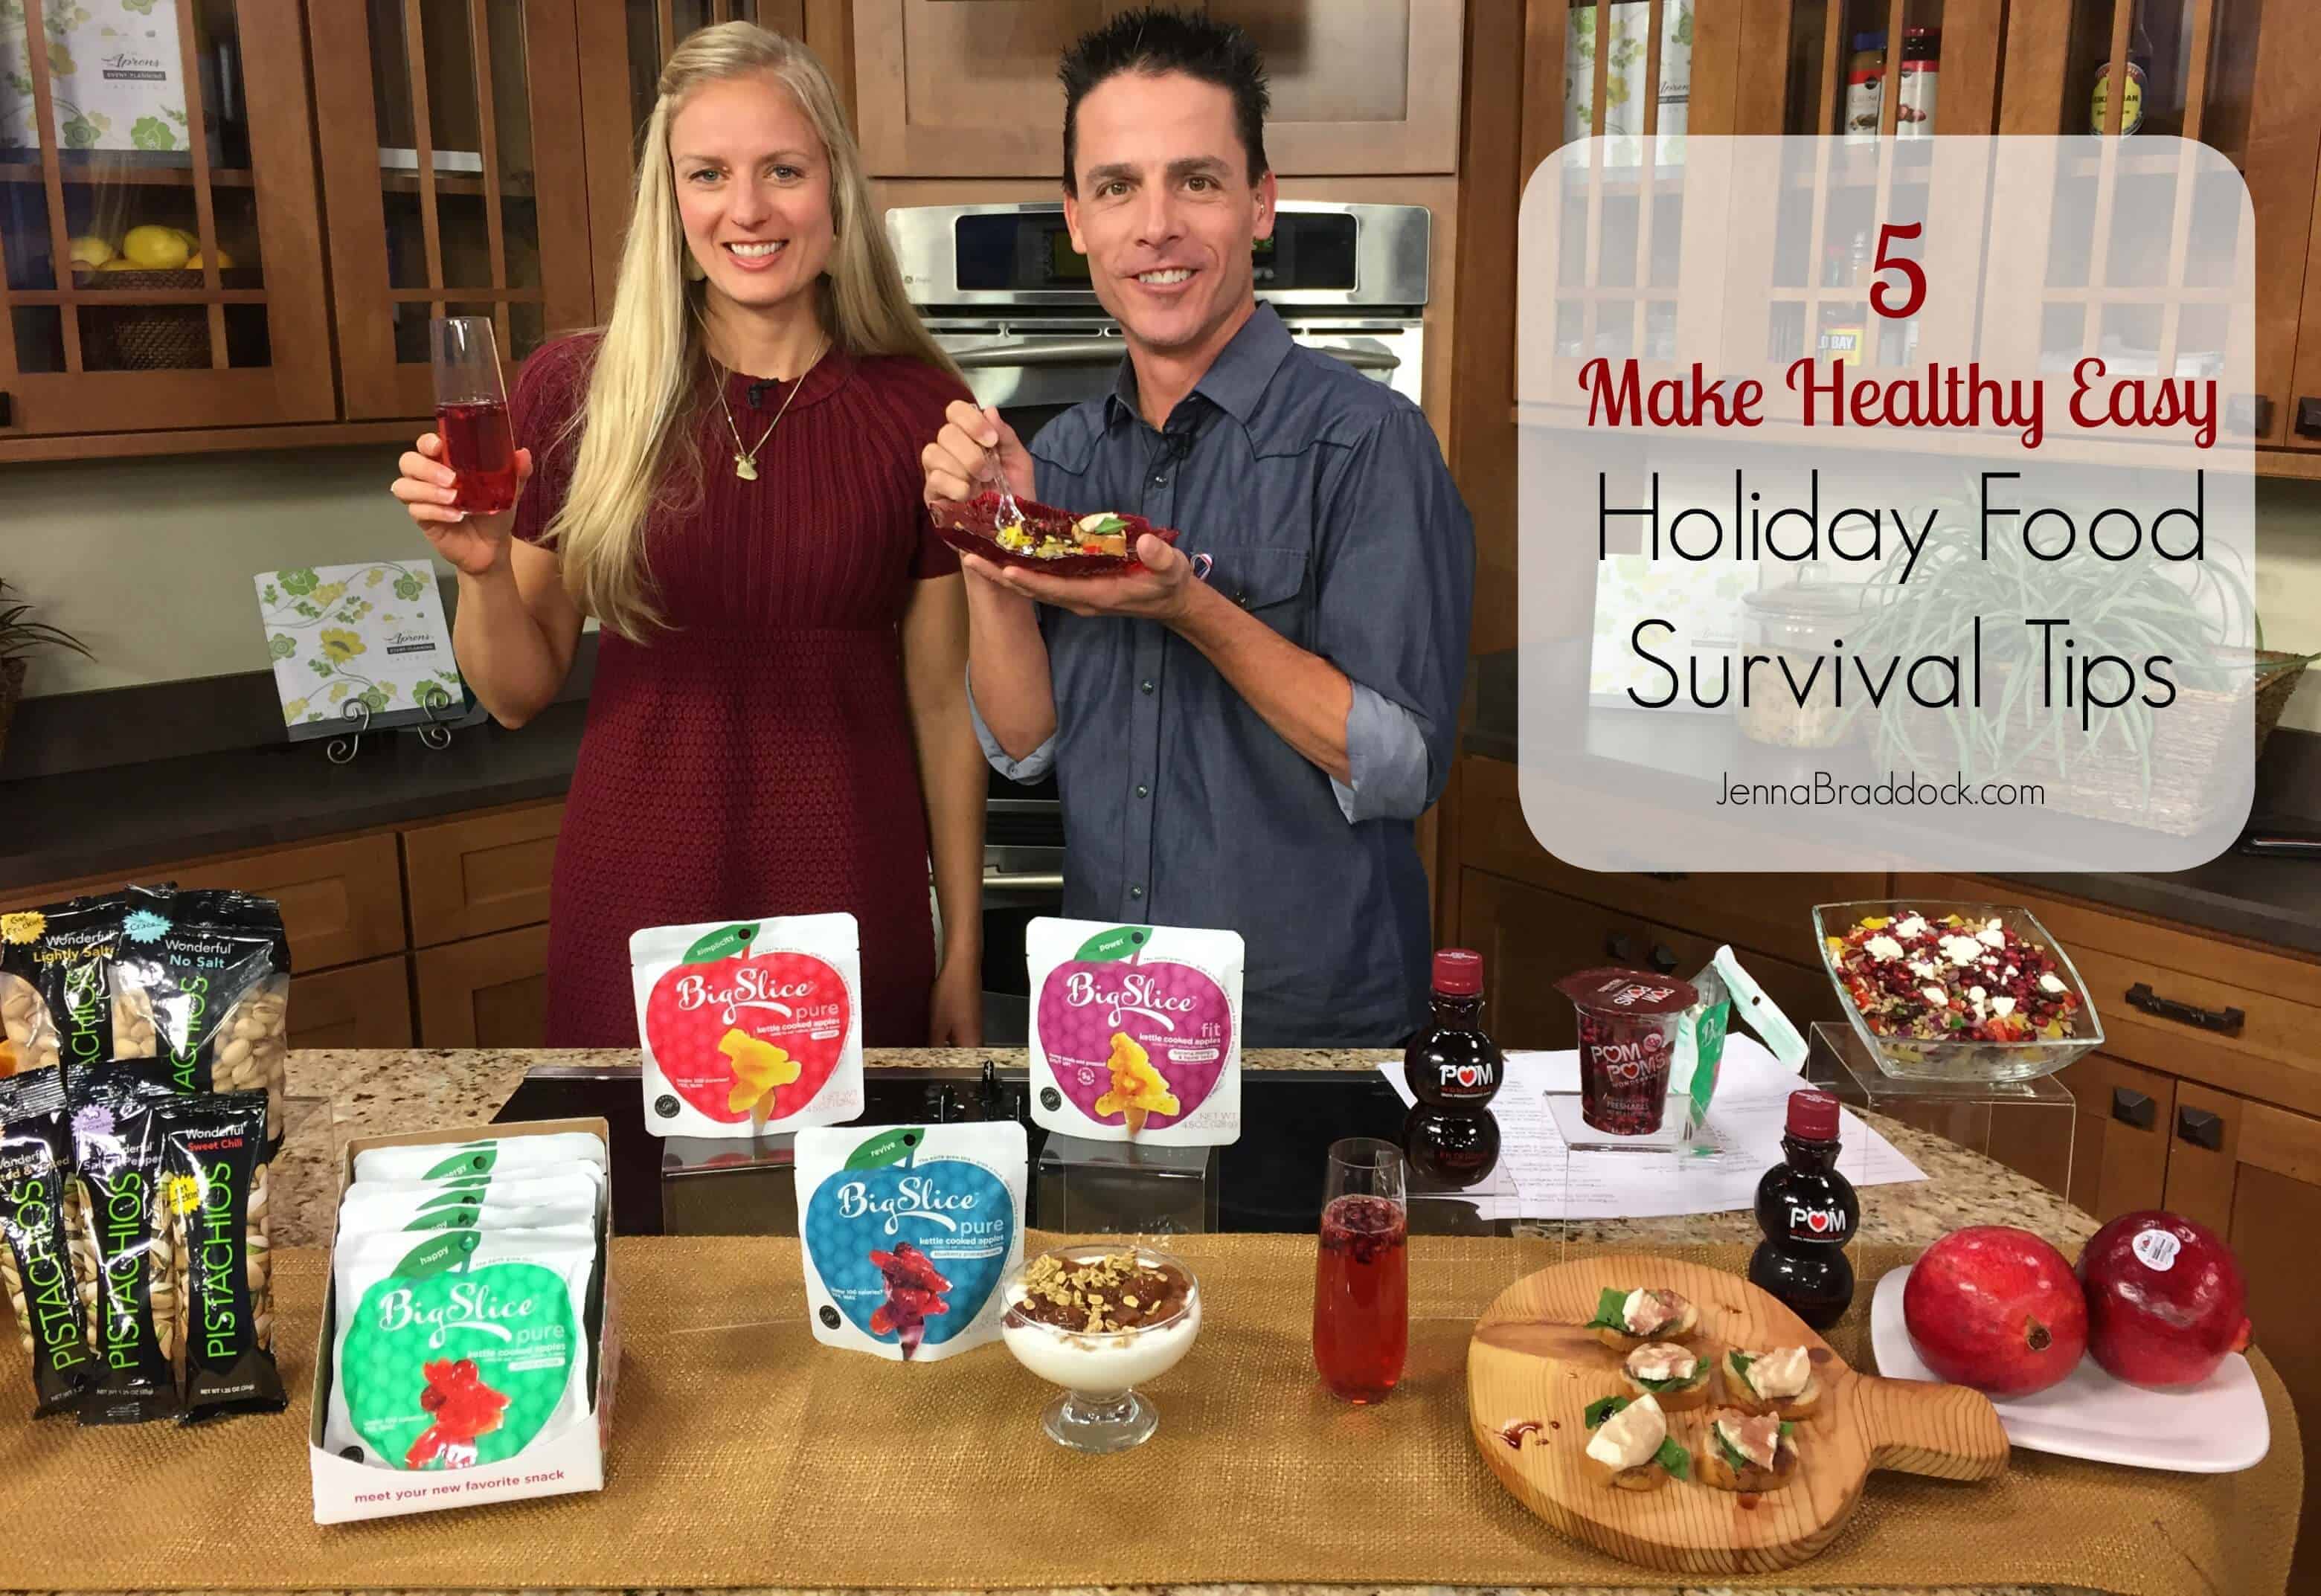 https://jennabraddock.com/wp-content/uploads/2015/11/MHE-holiday-food-survival-tips.jpg